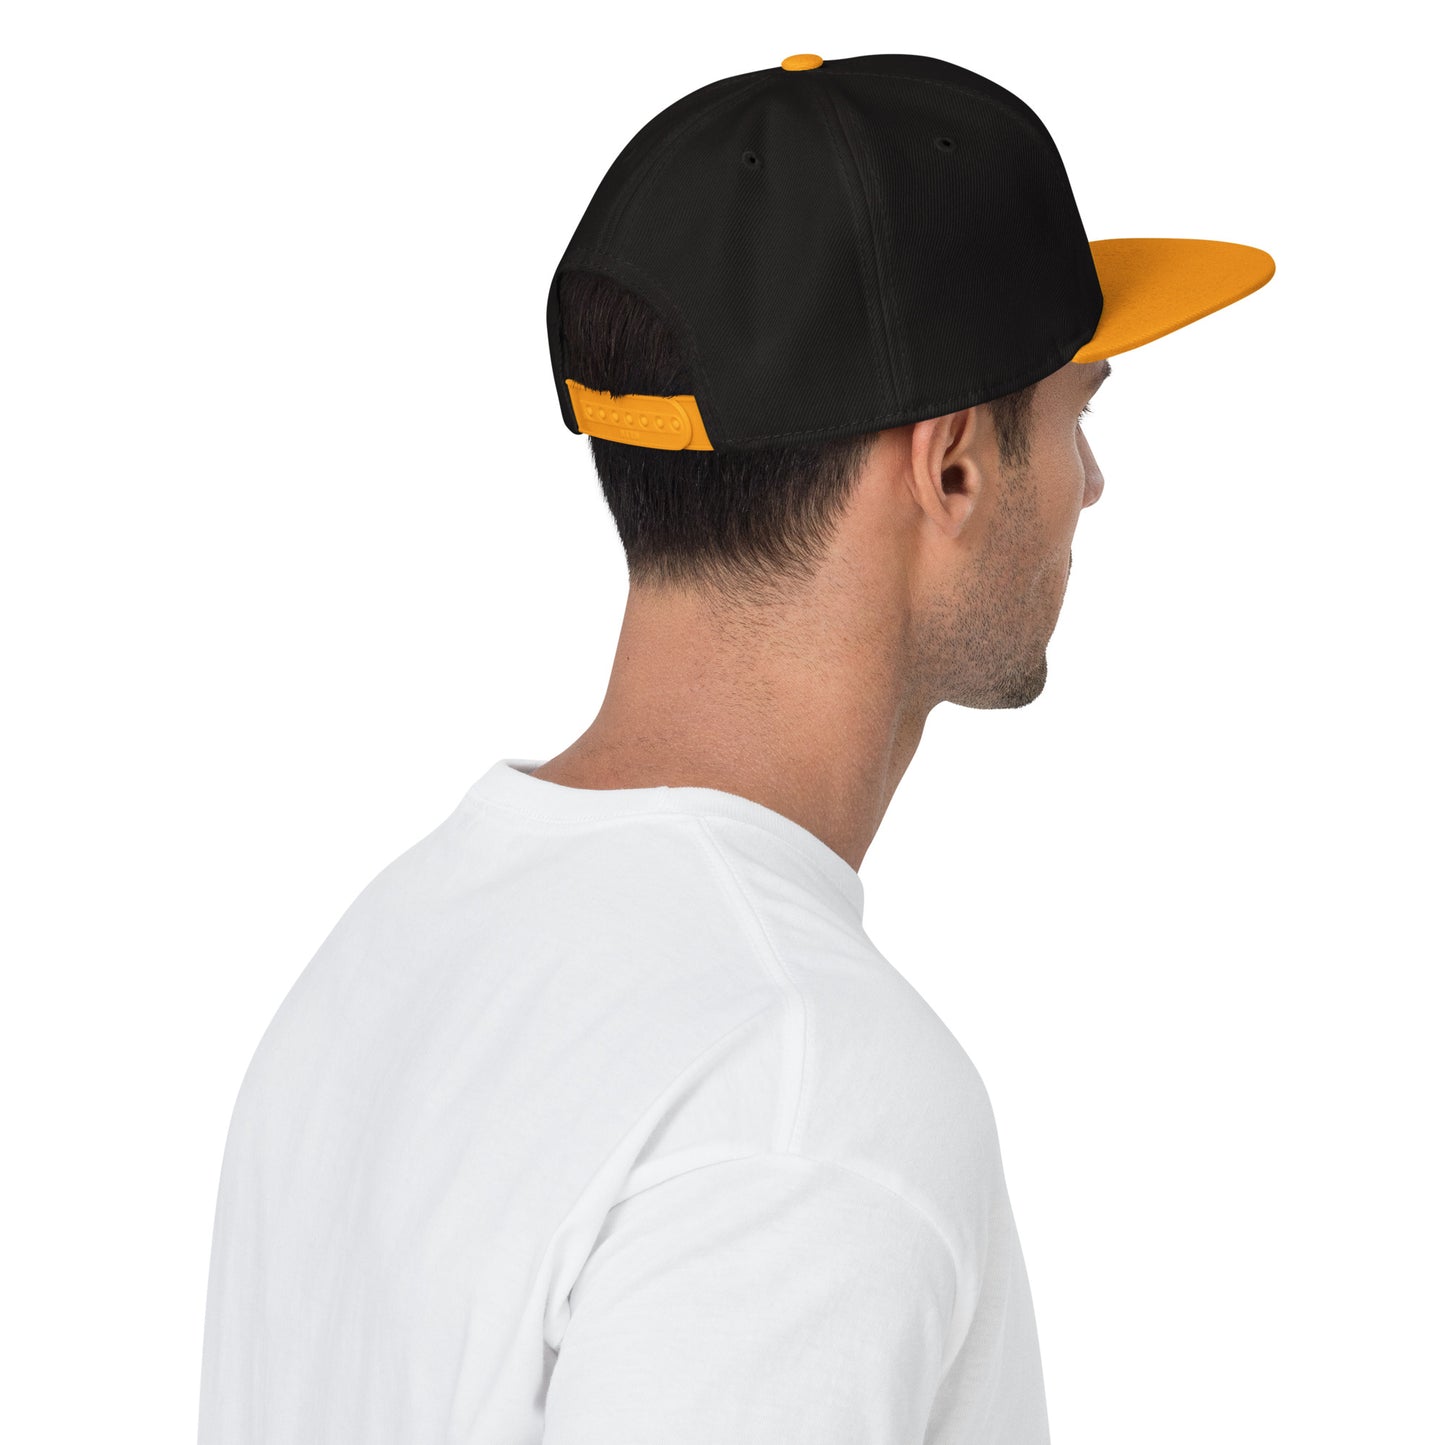 BASC color brim CUSTOM Snapback Hat